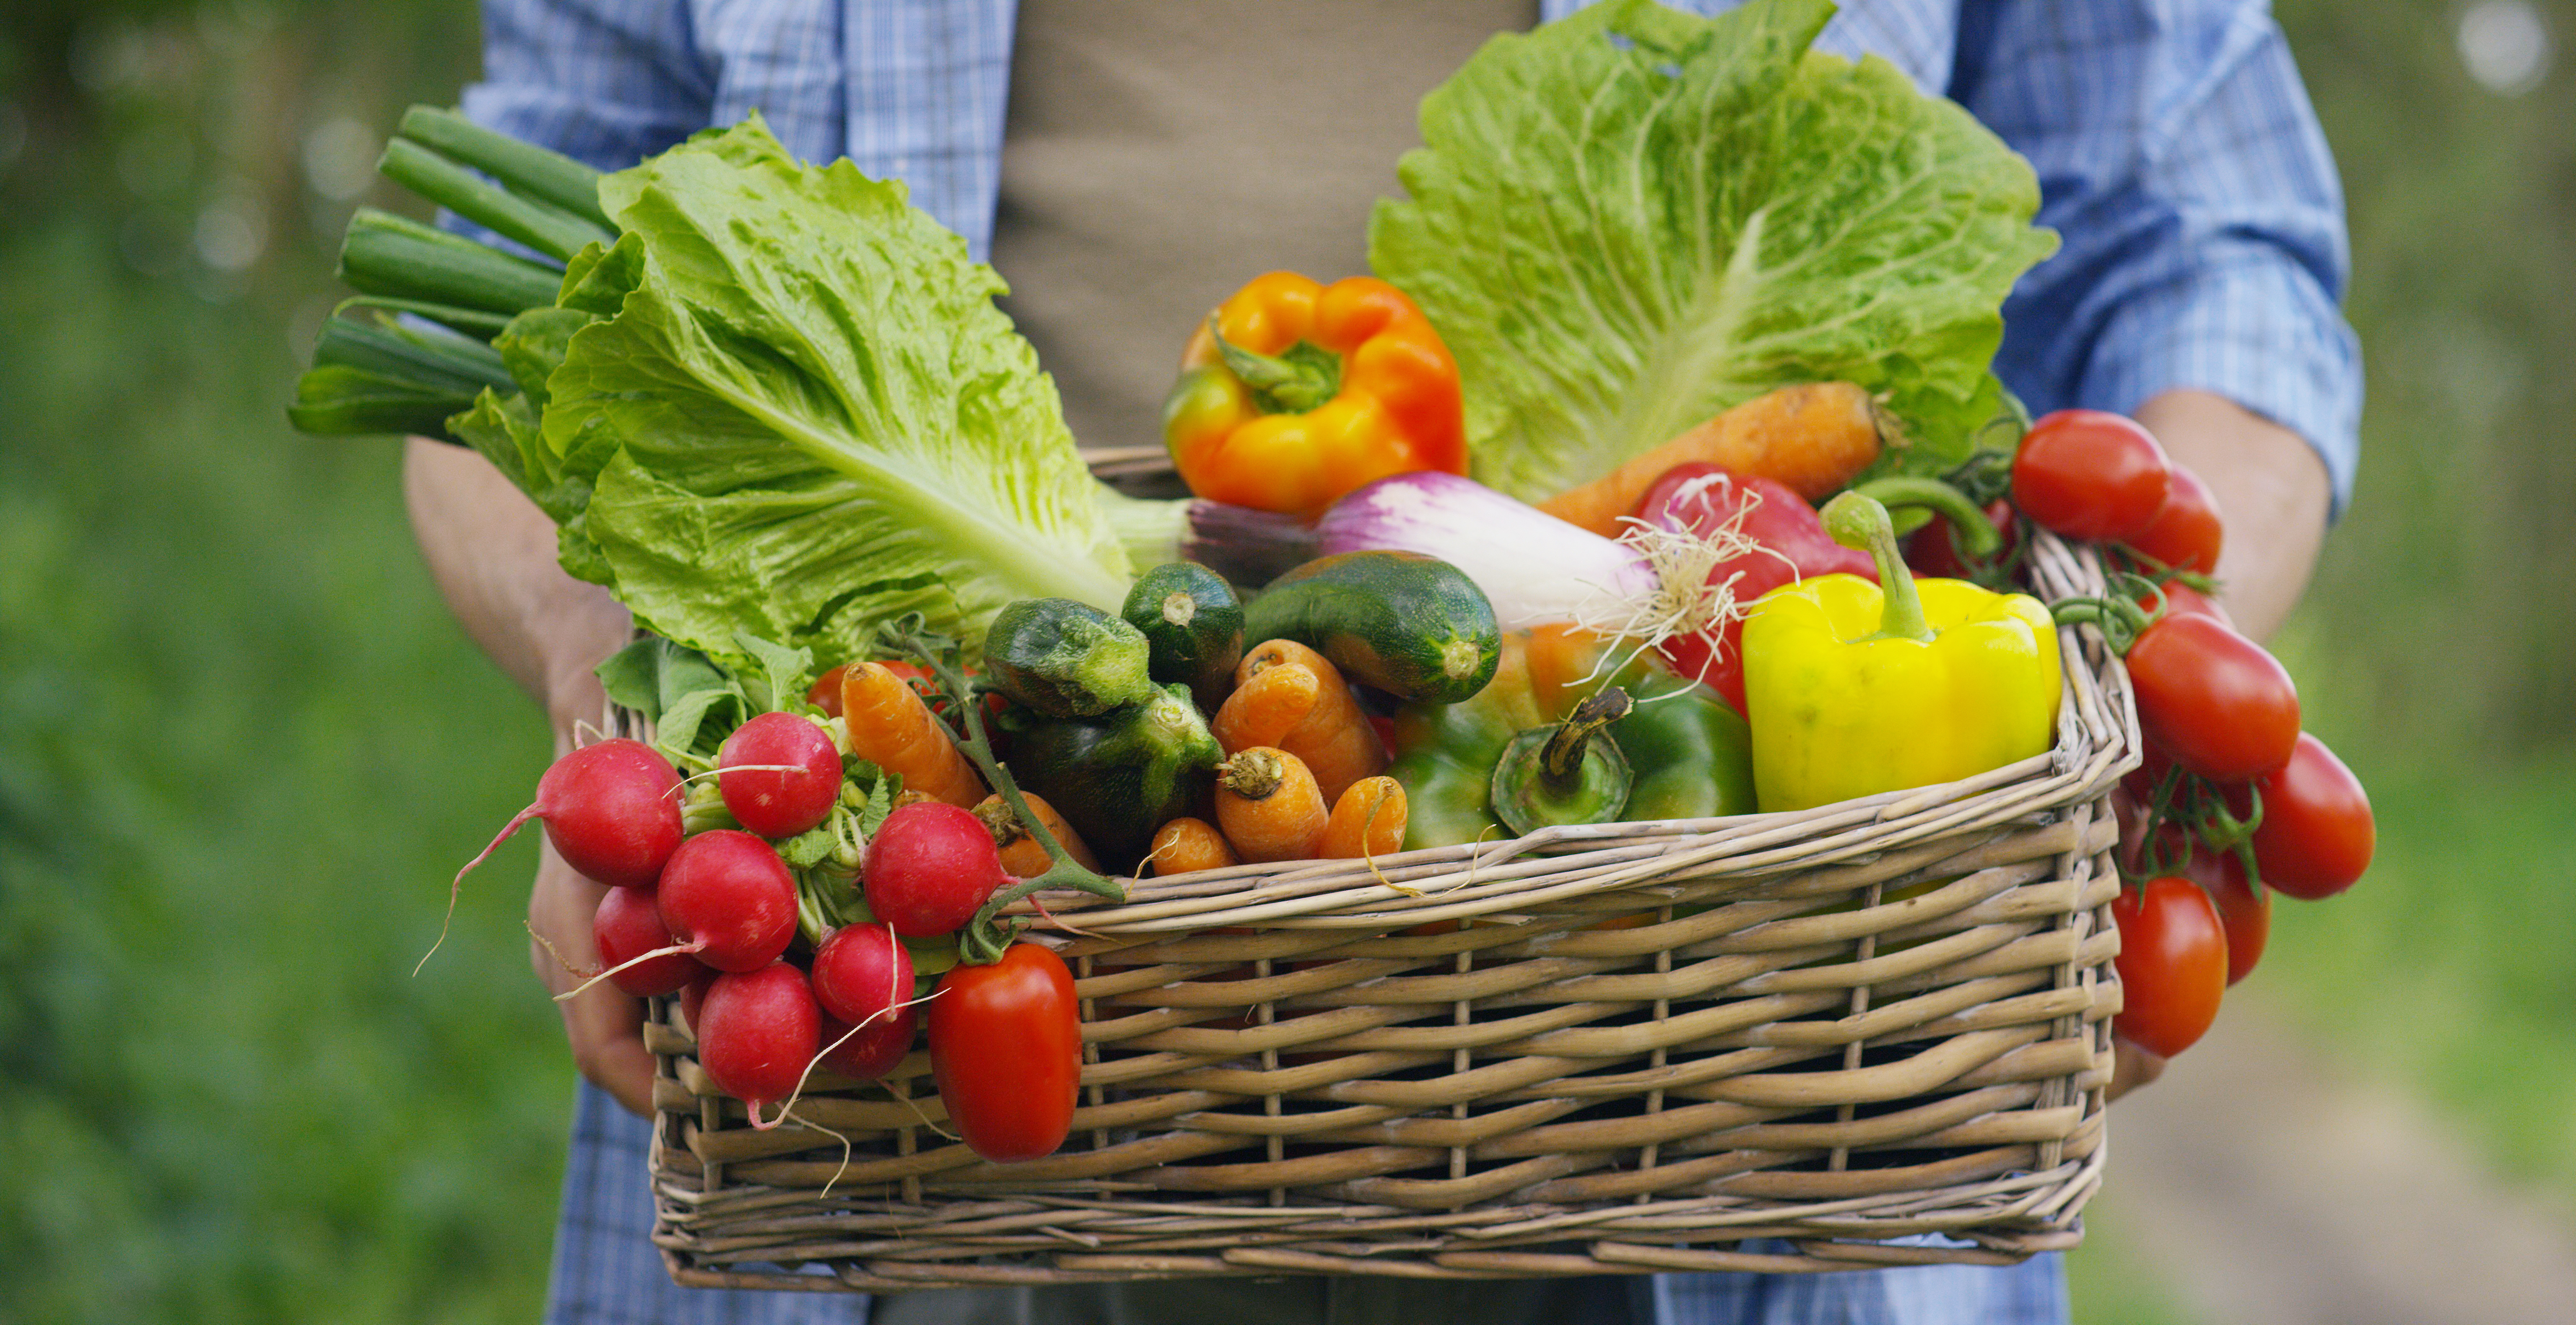 farmer holding fresh vegetables in a basket